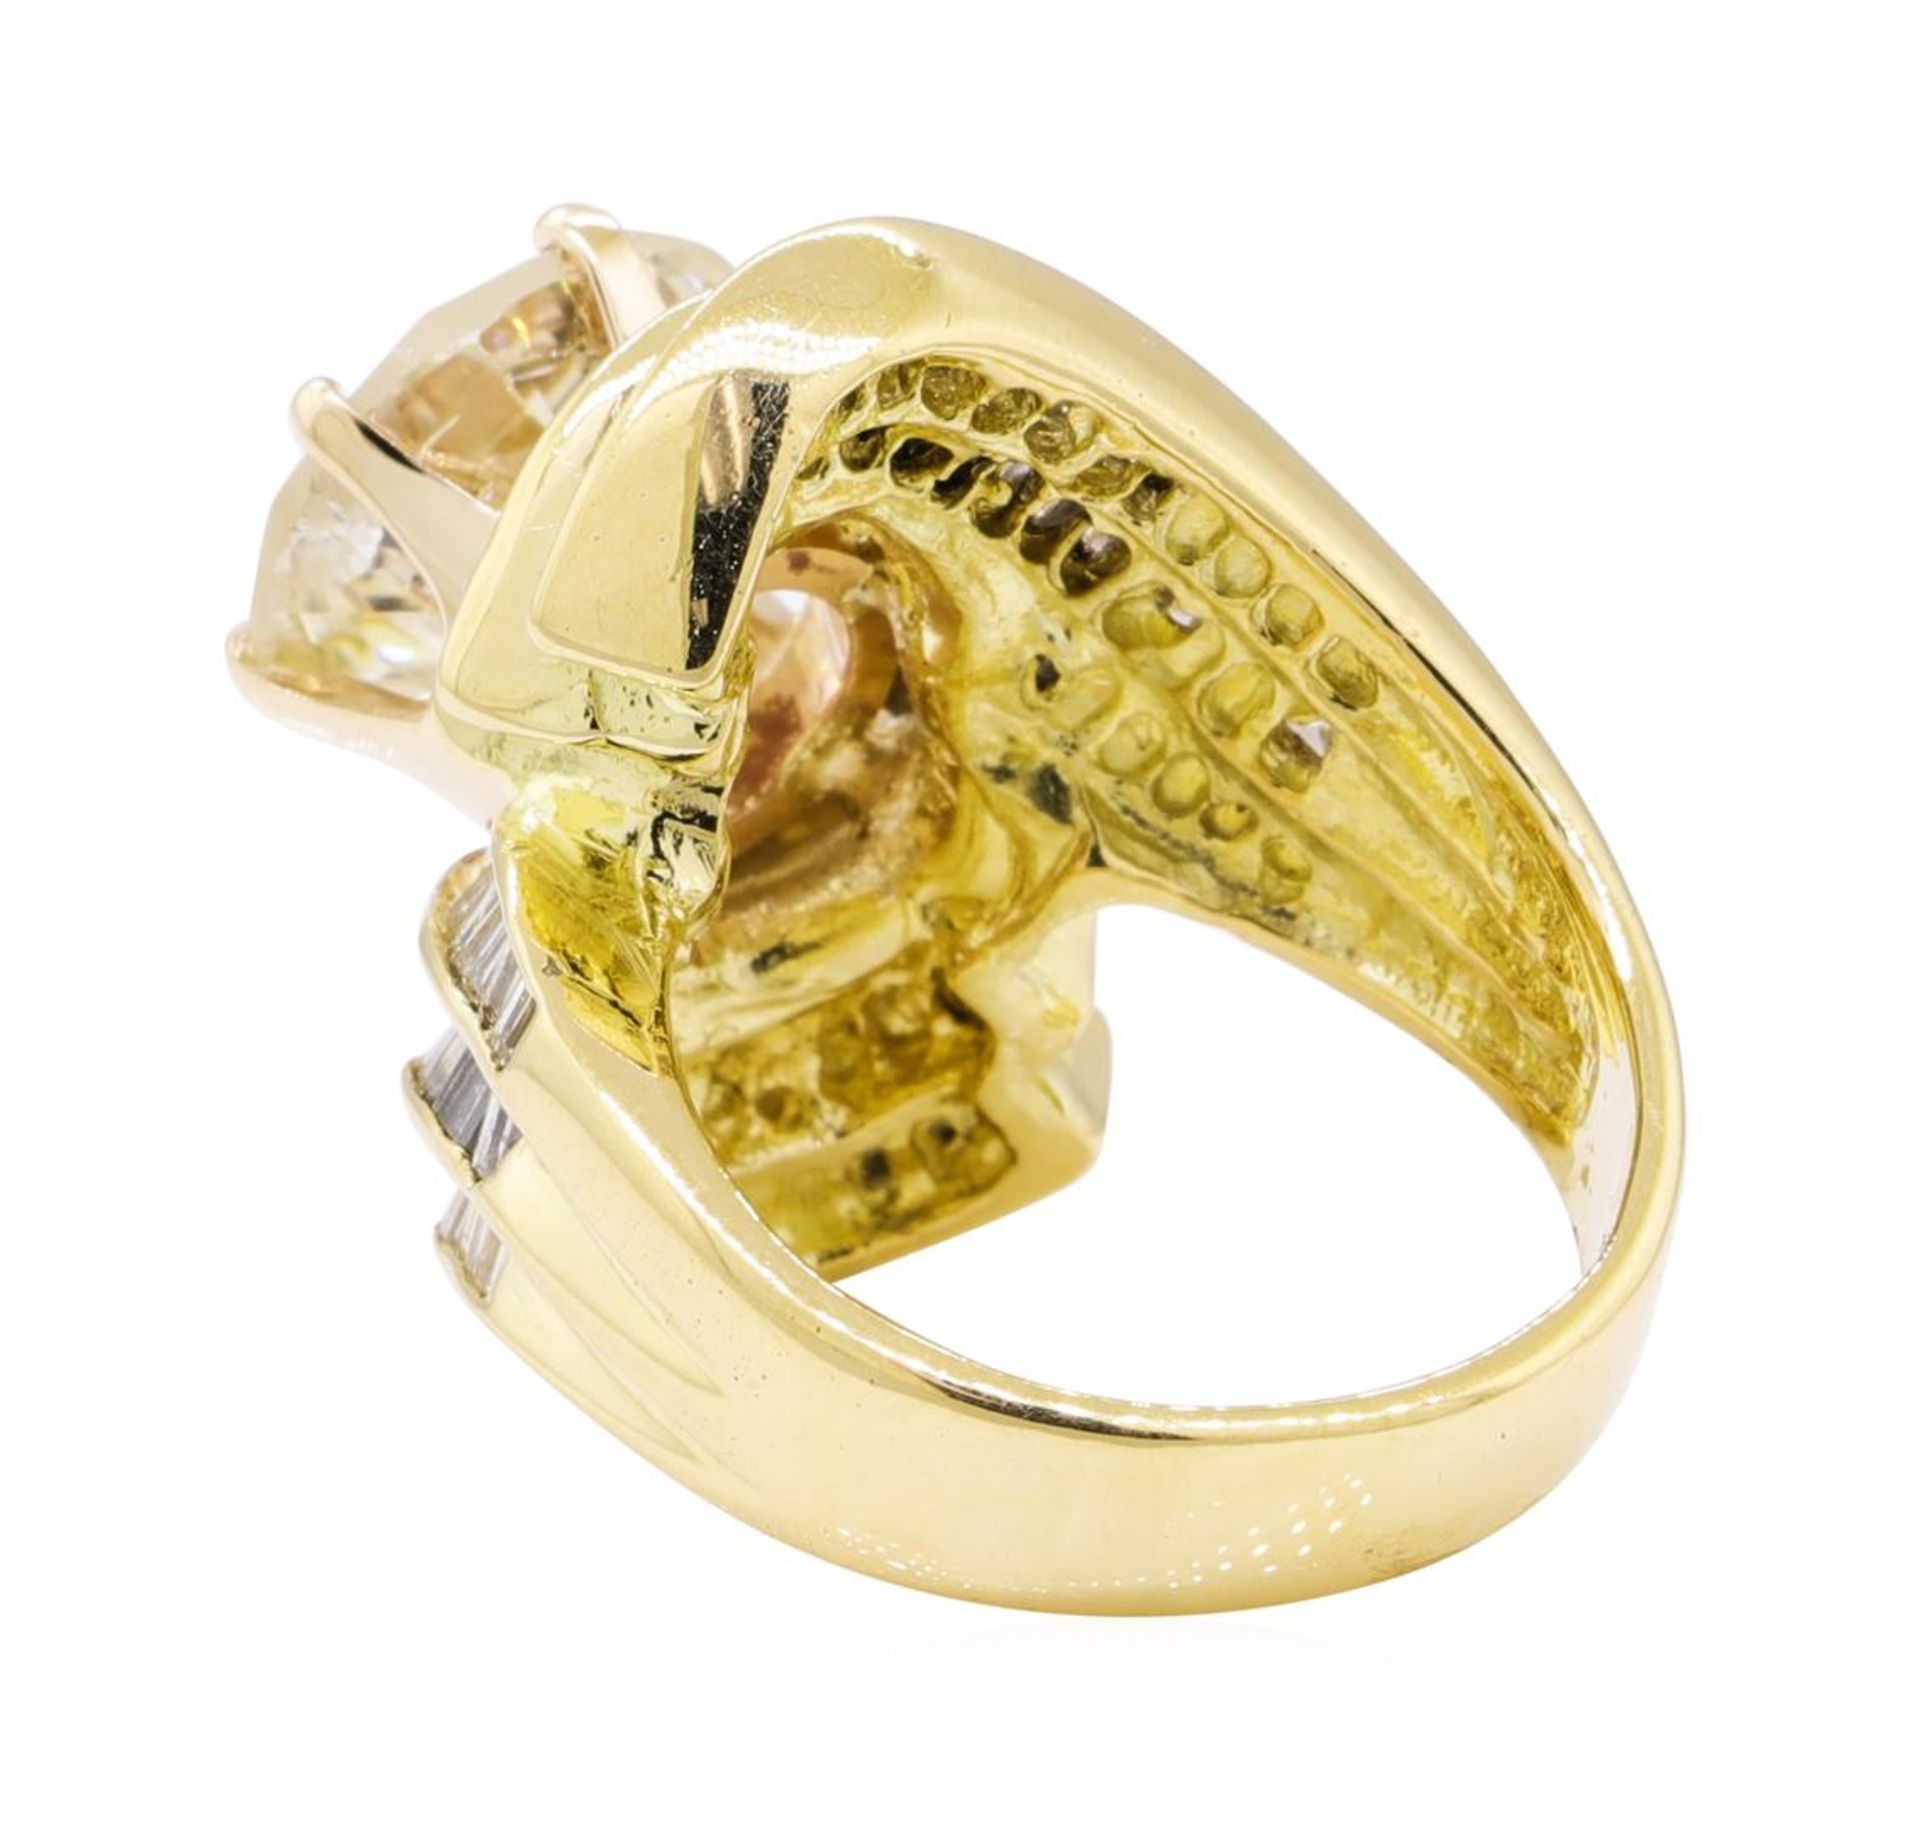 7.51 ctw Diamond Ring - 18KT Yellow Gold - Image 3 of 5